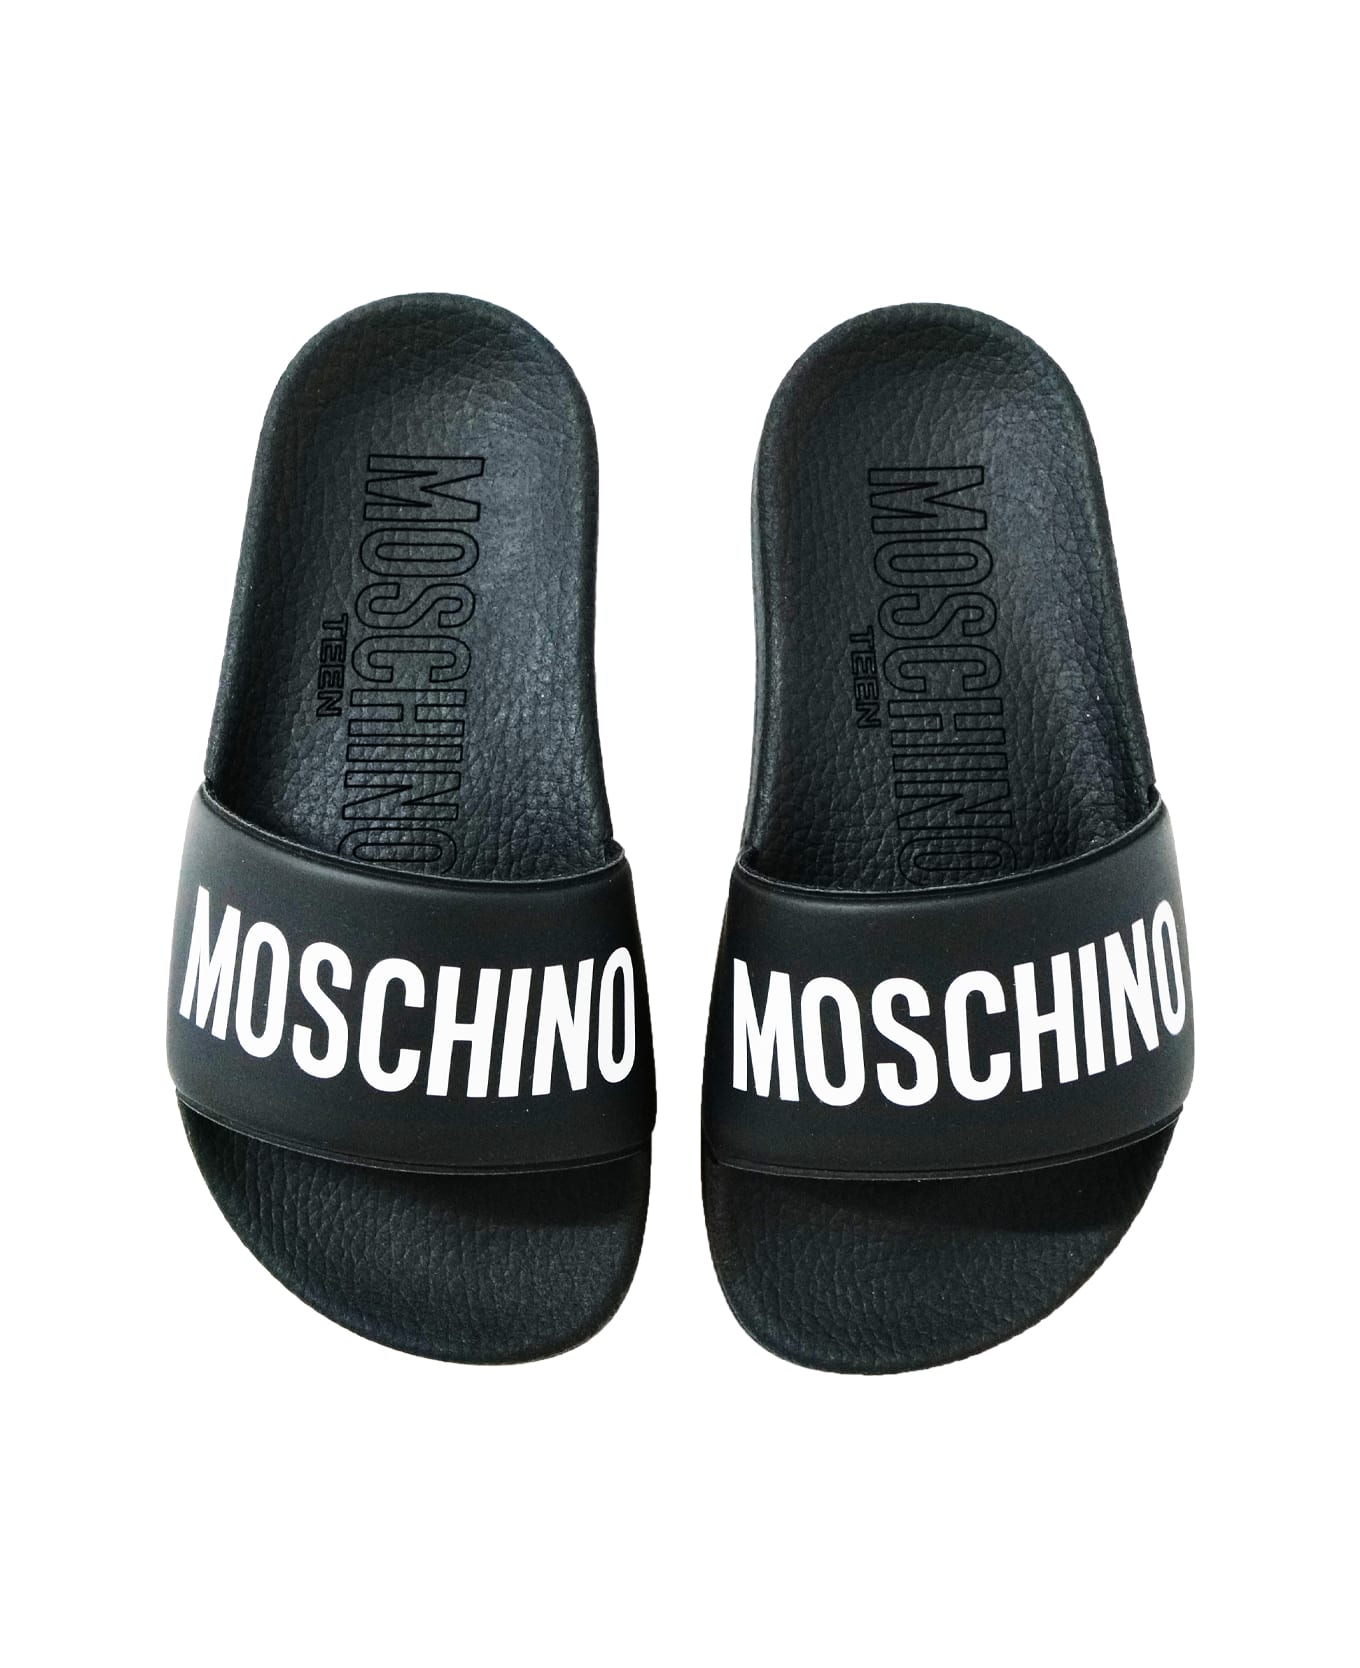 Moschino Slippers - Back シューズ